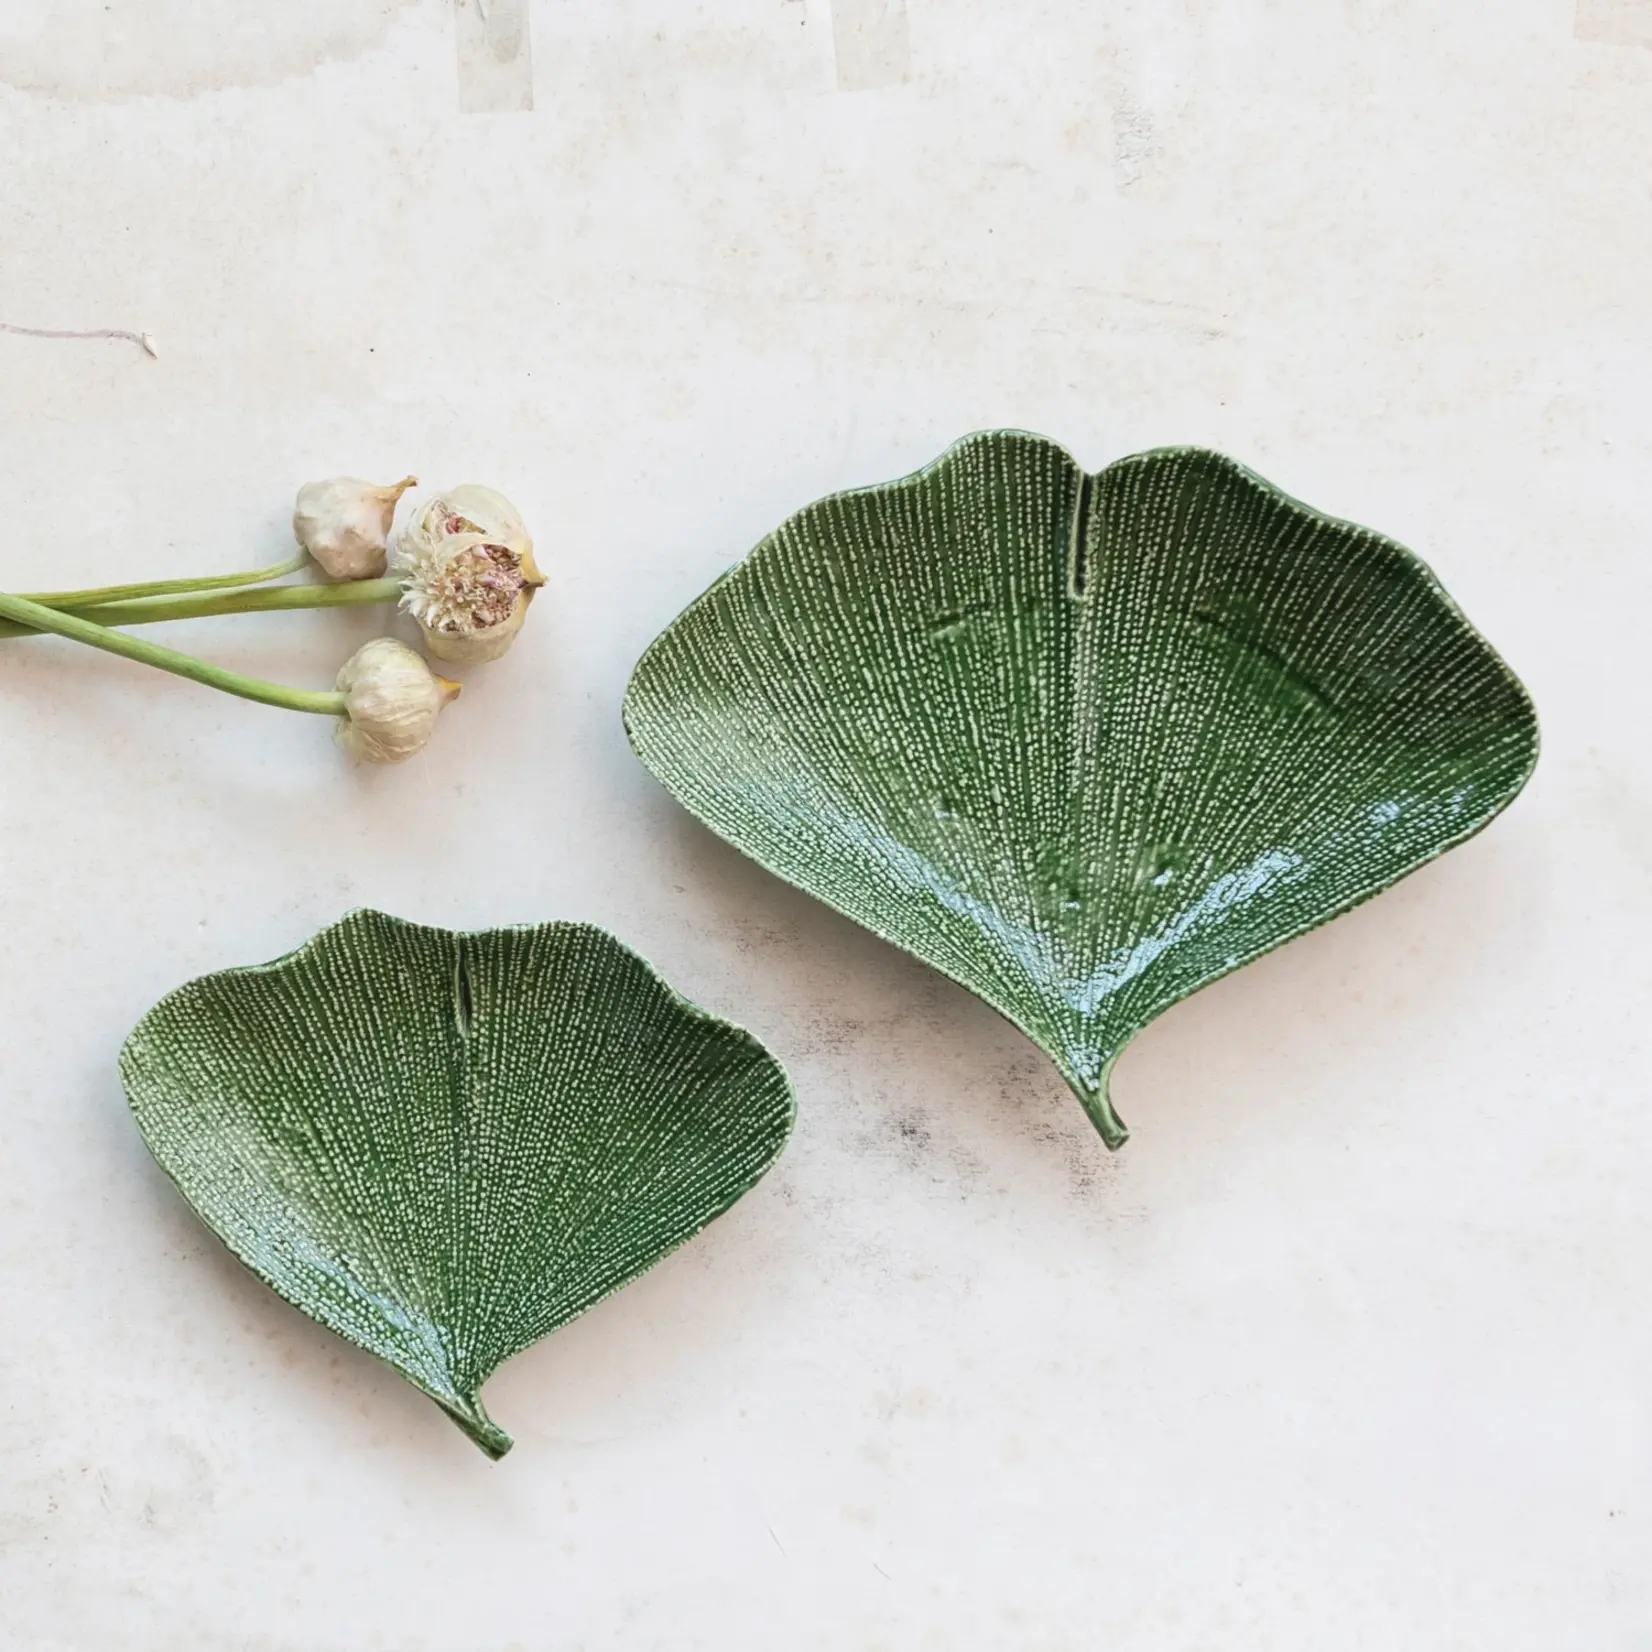 Gingko Leaf Shaped Plate - Small